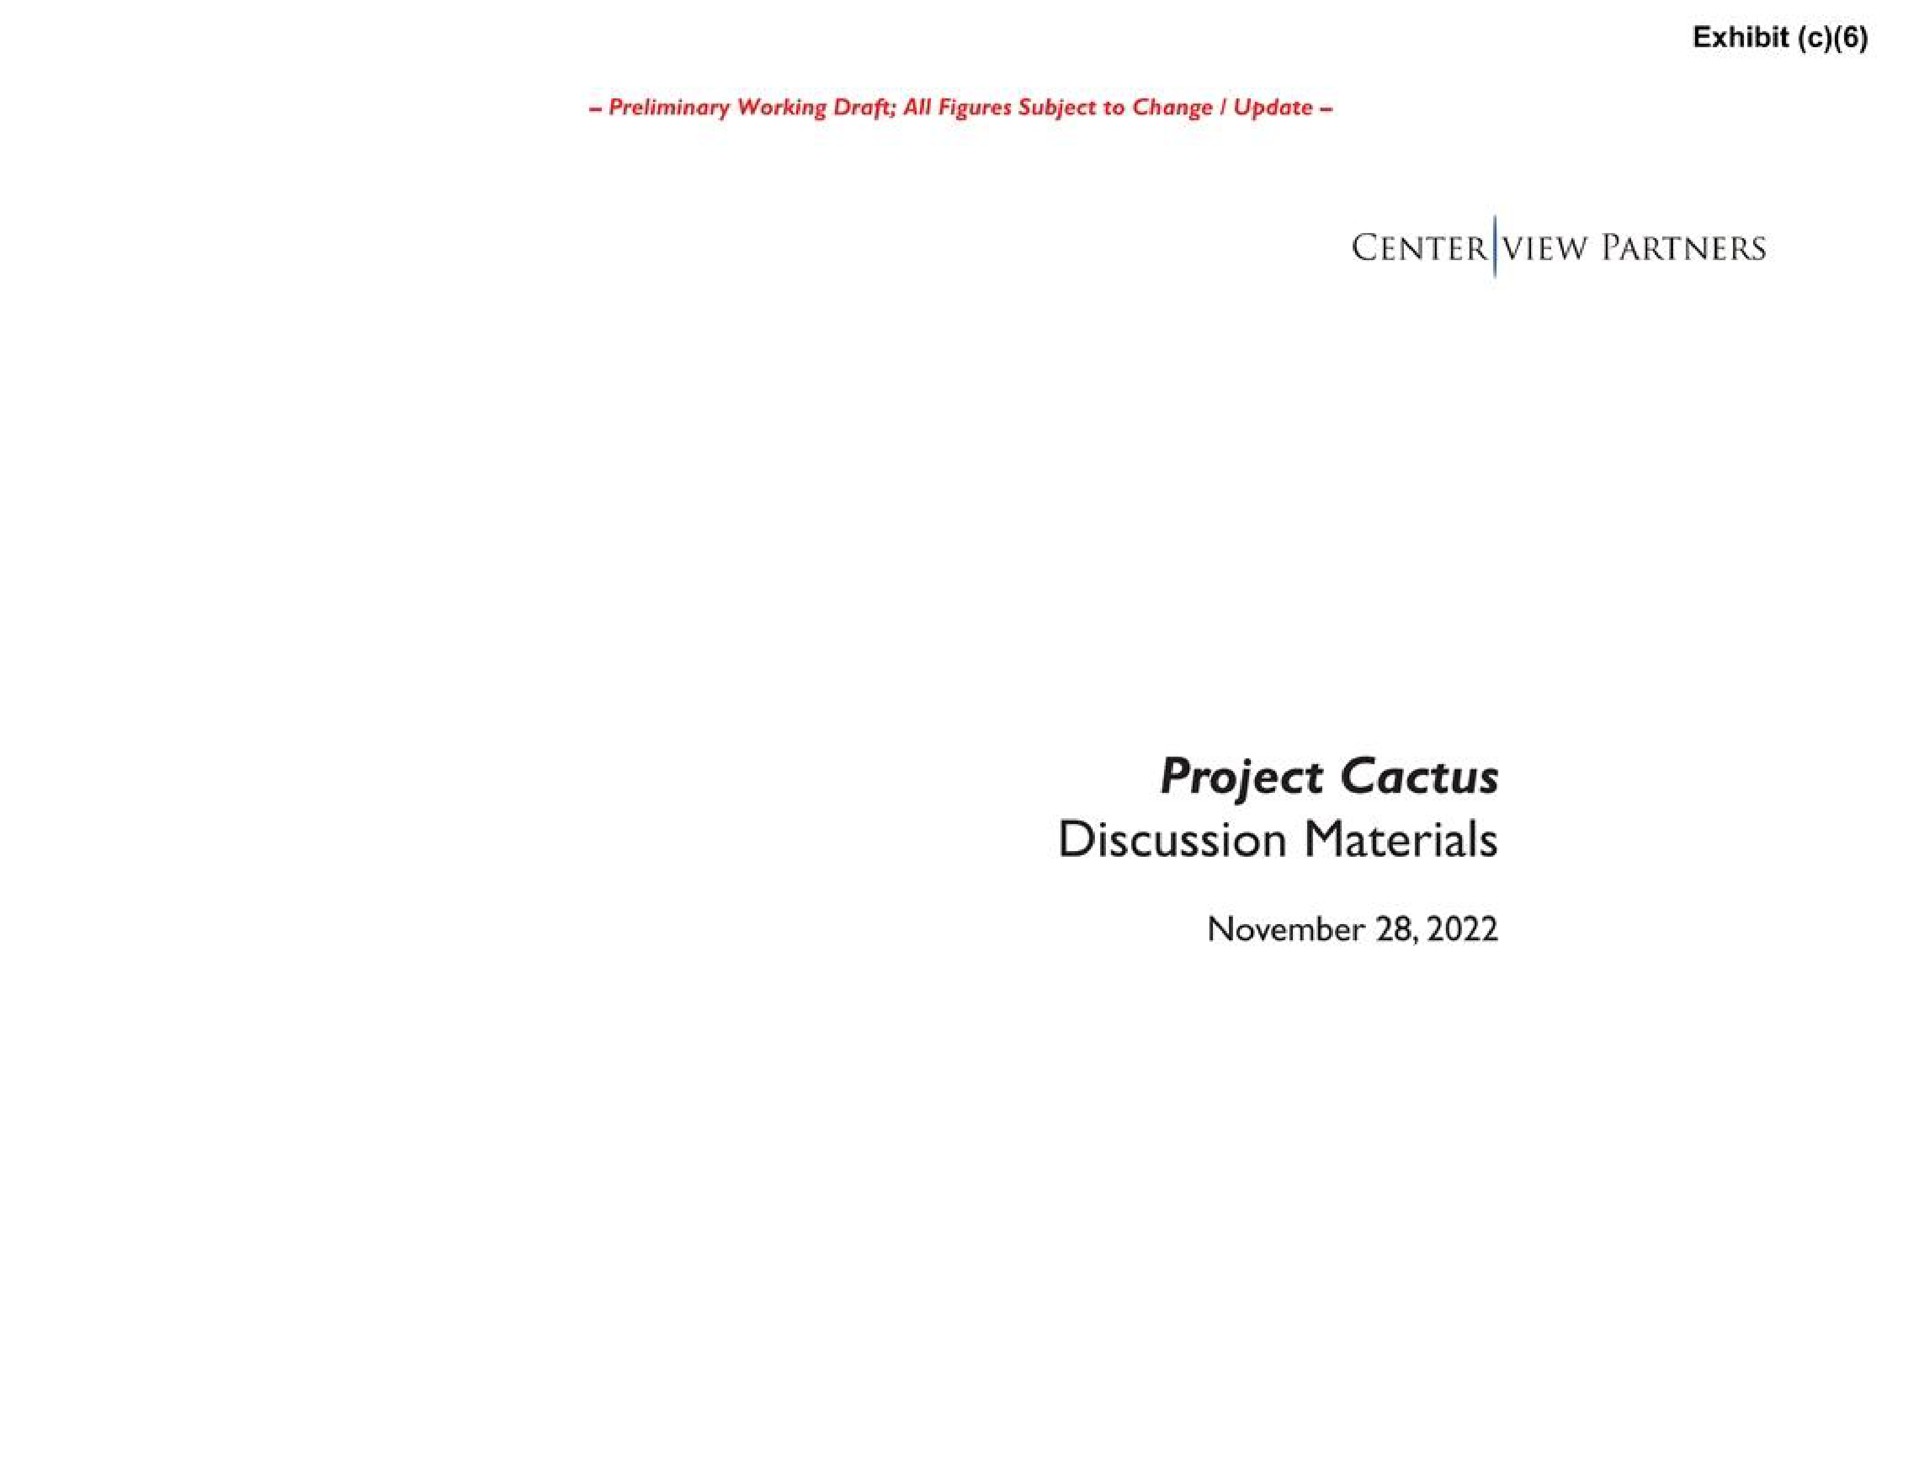 exhibit partners project discussion materials | Centerview Partners